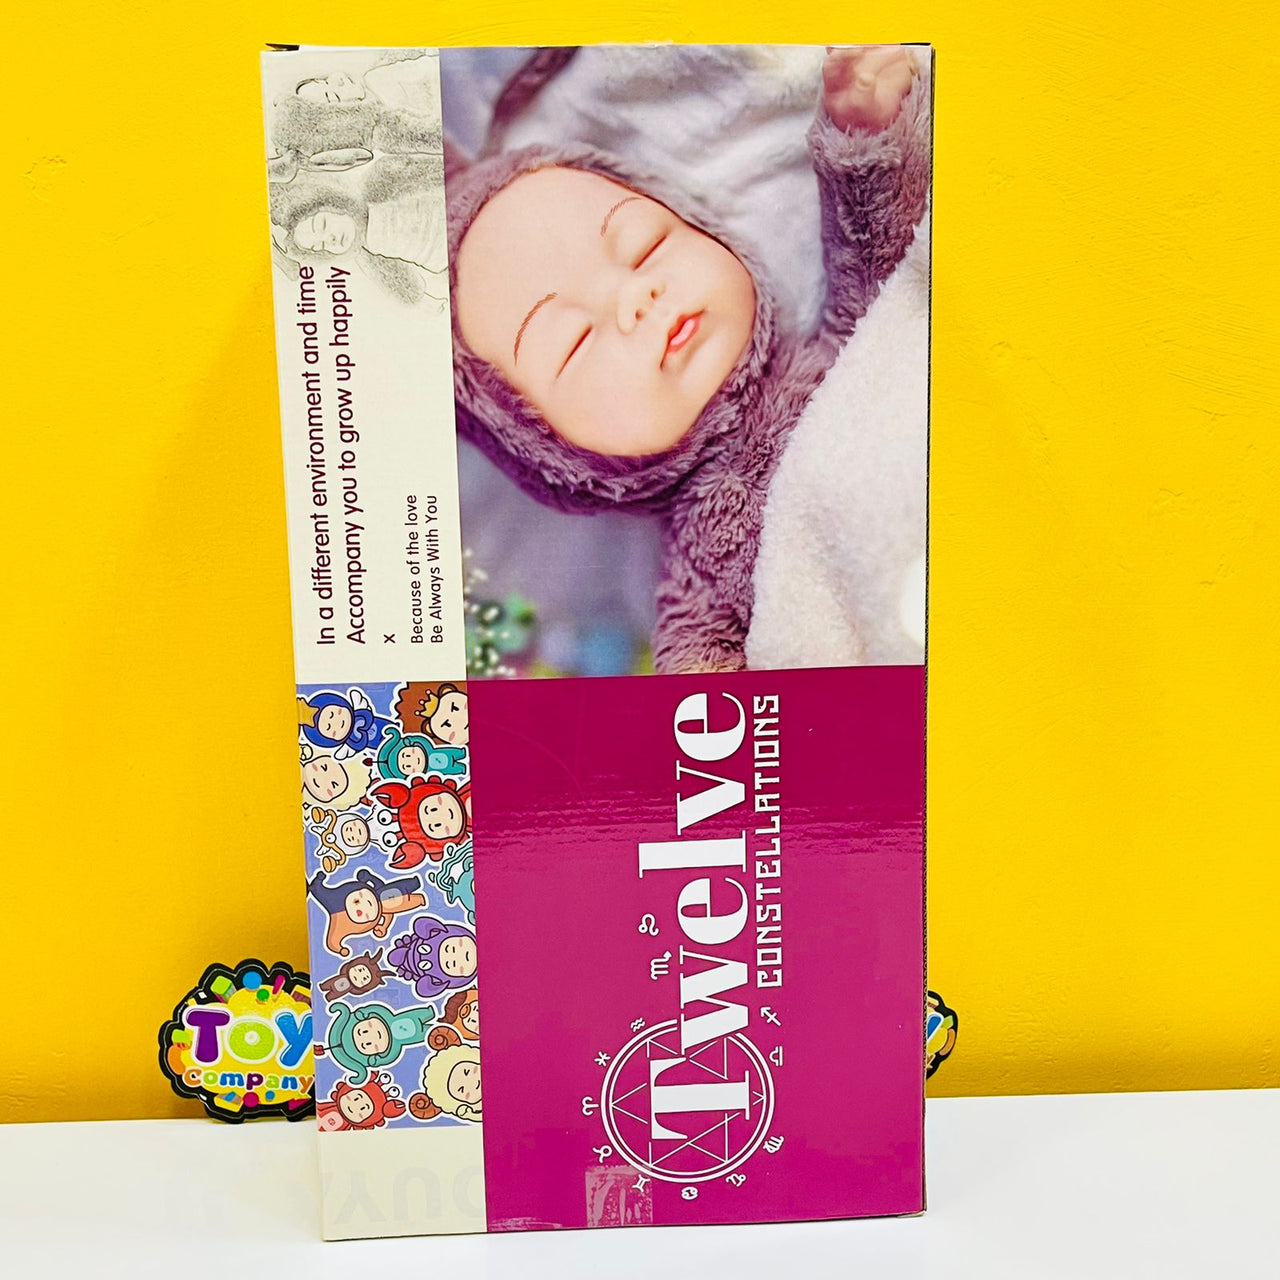 25cm Premium Realistic Stuffed Baby Doll - Assortment